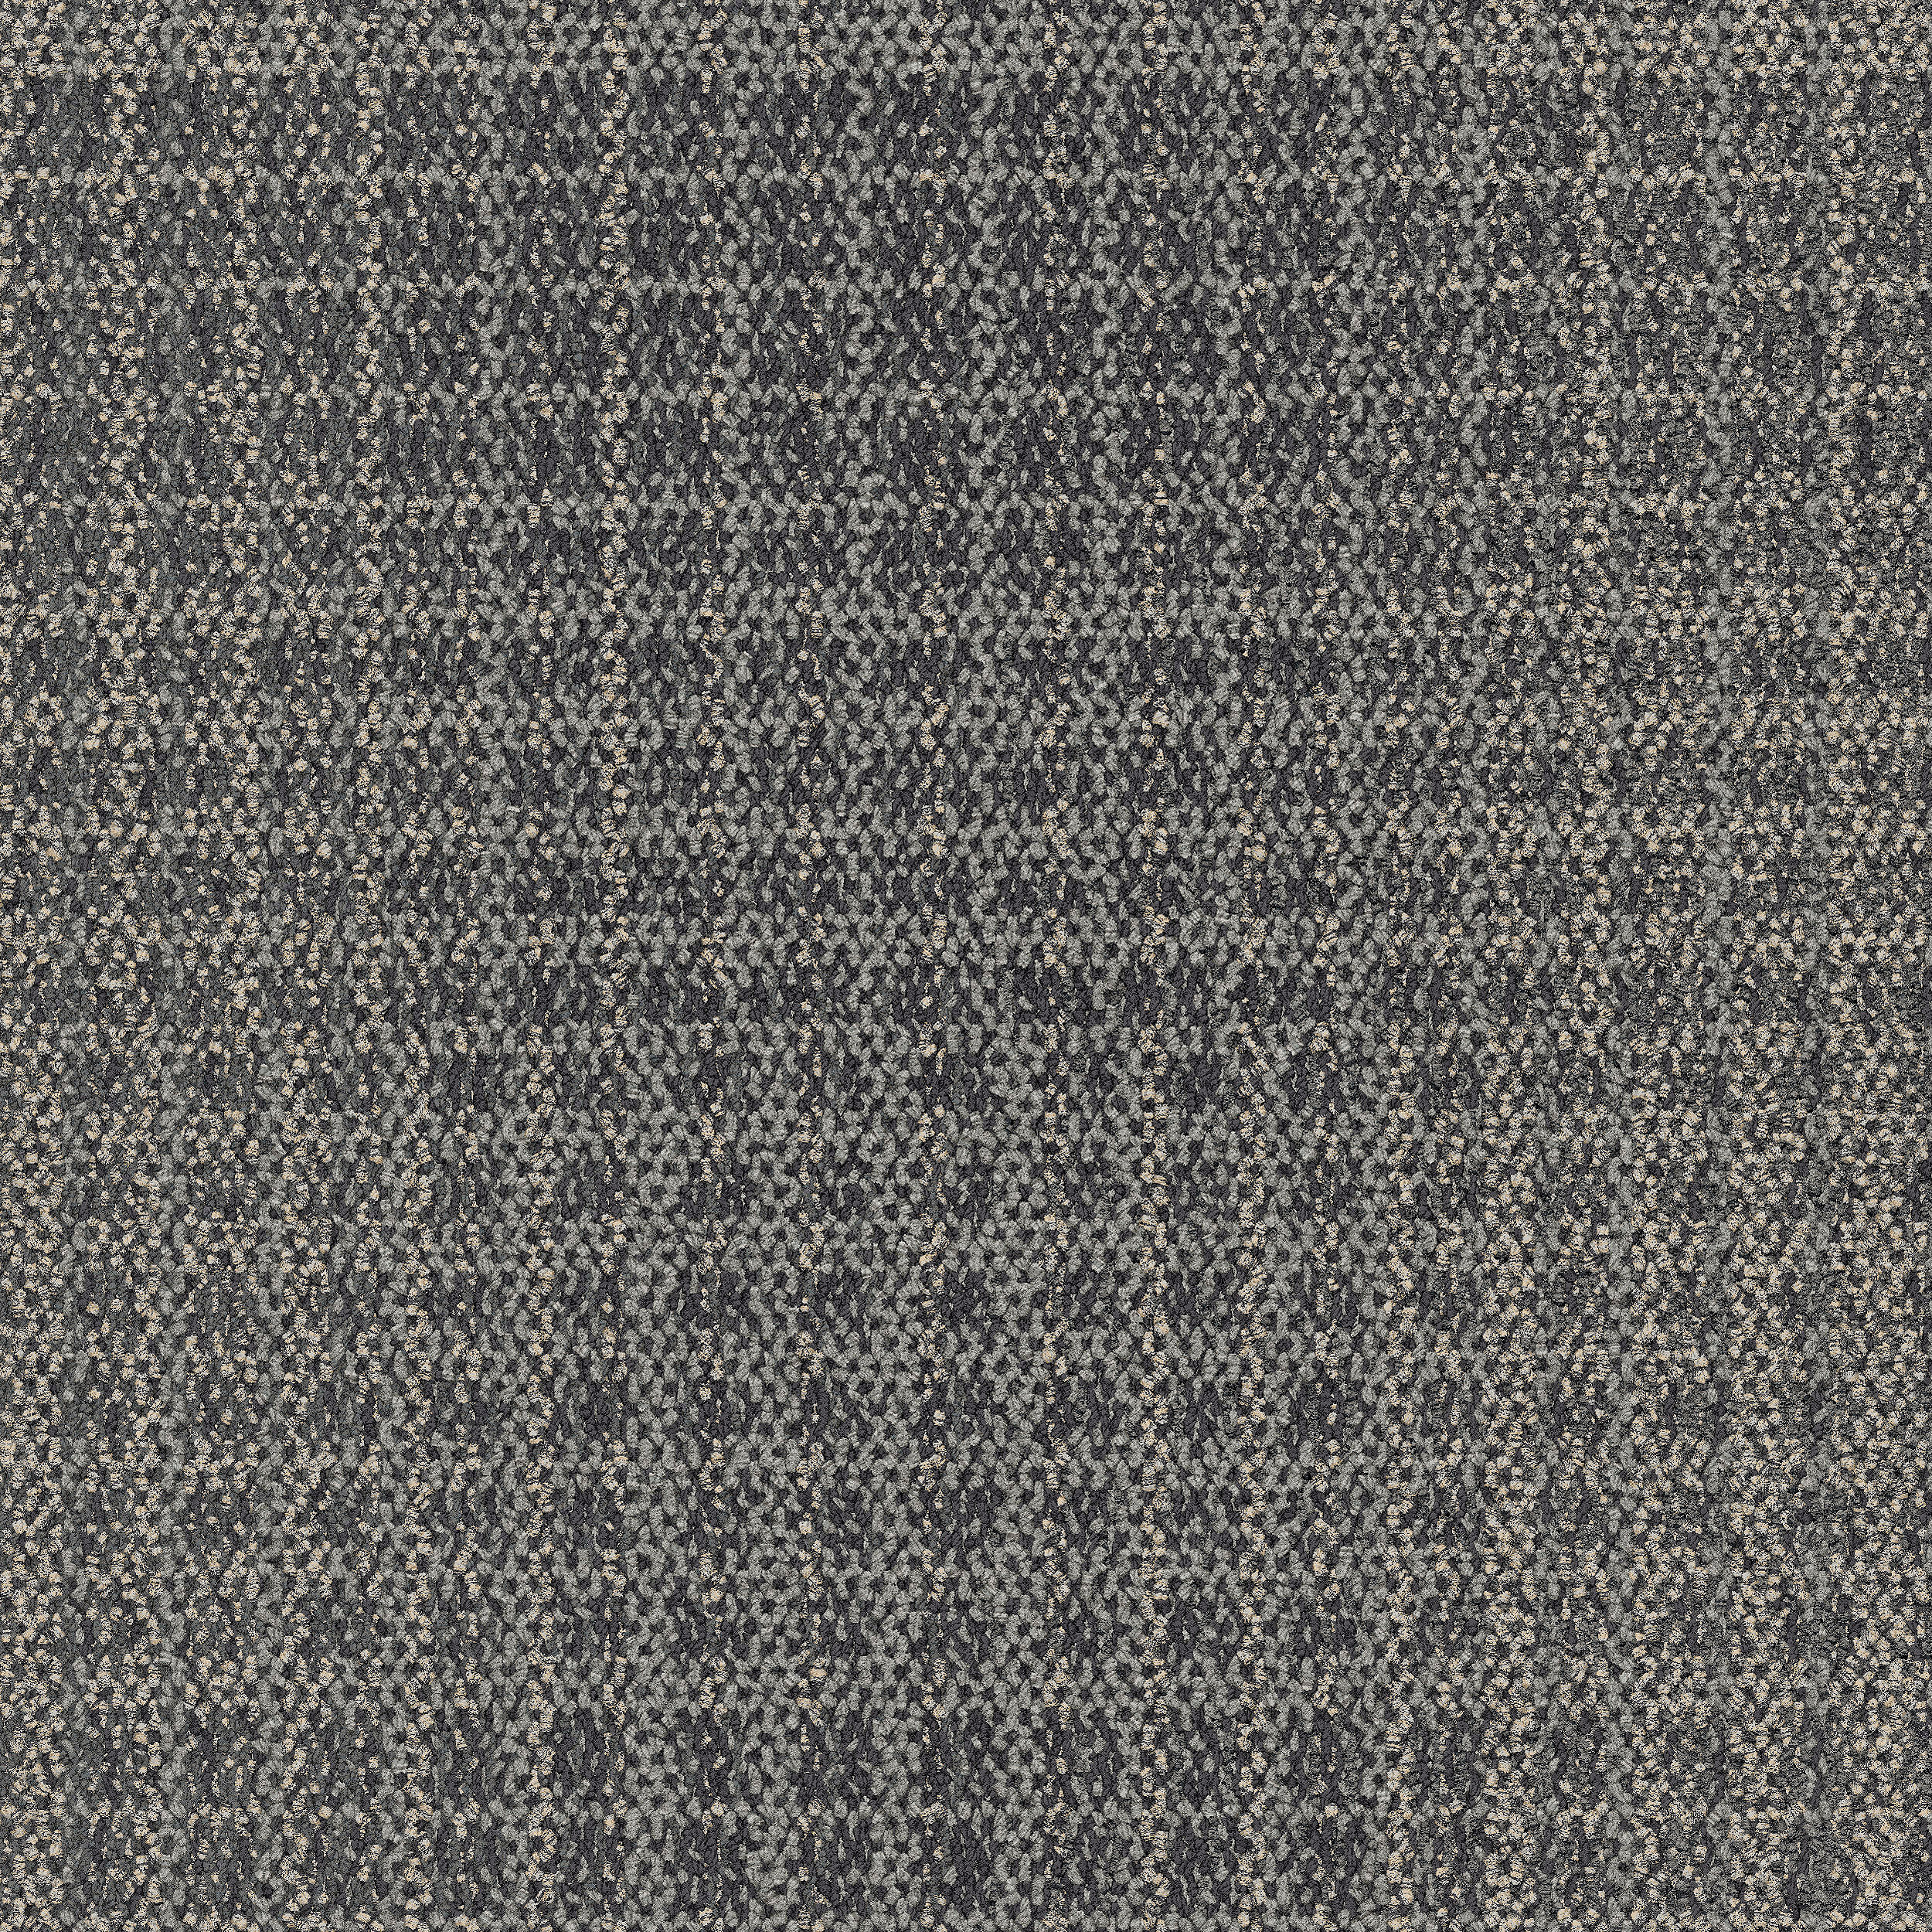 Breakout Carpet Tile in Overcast image number 8